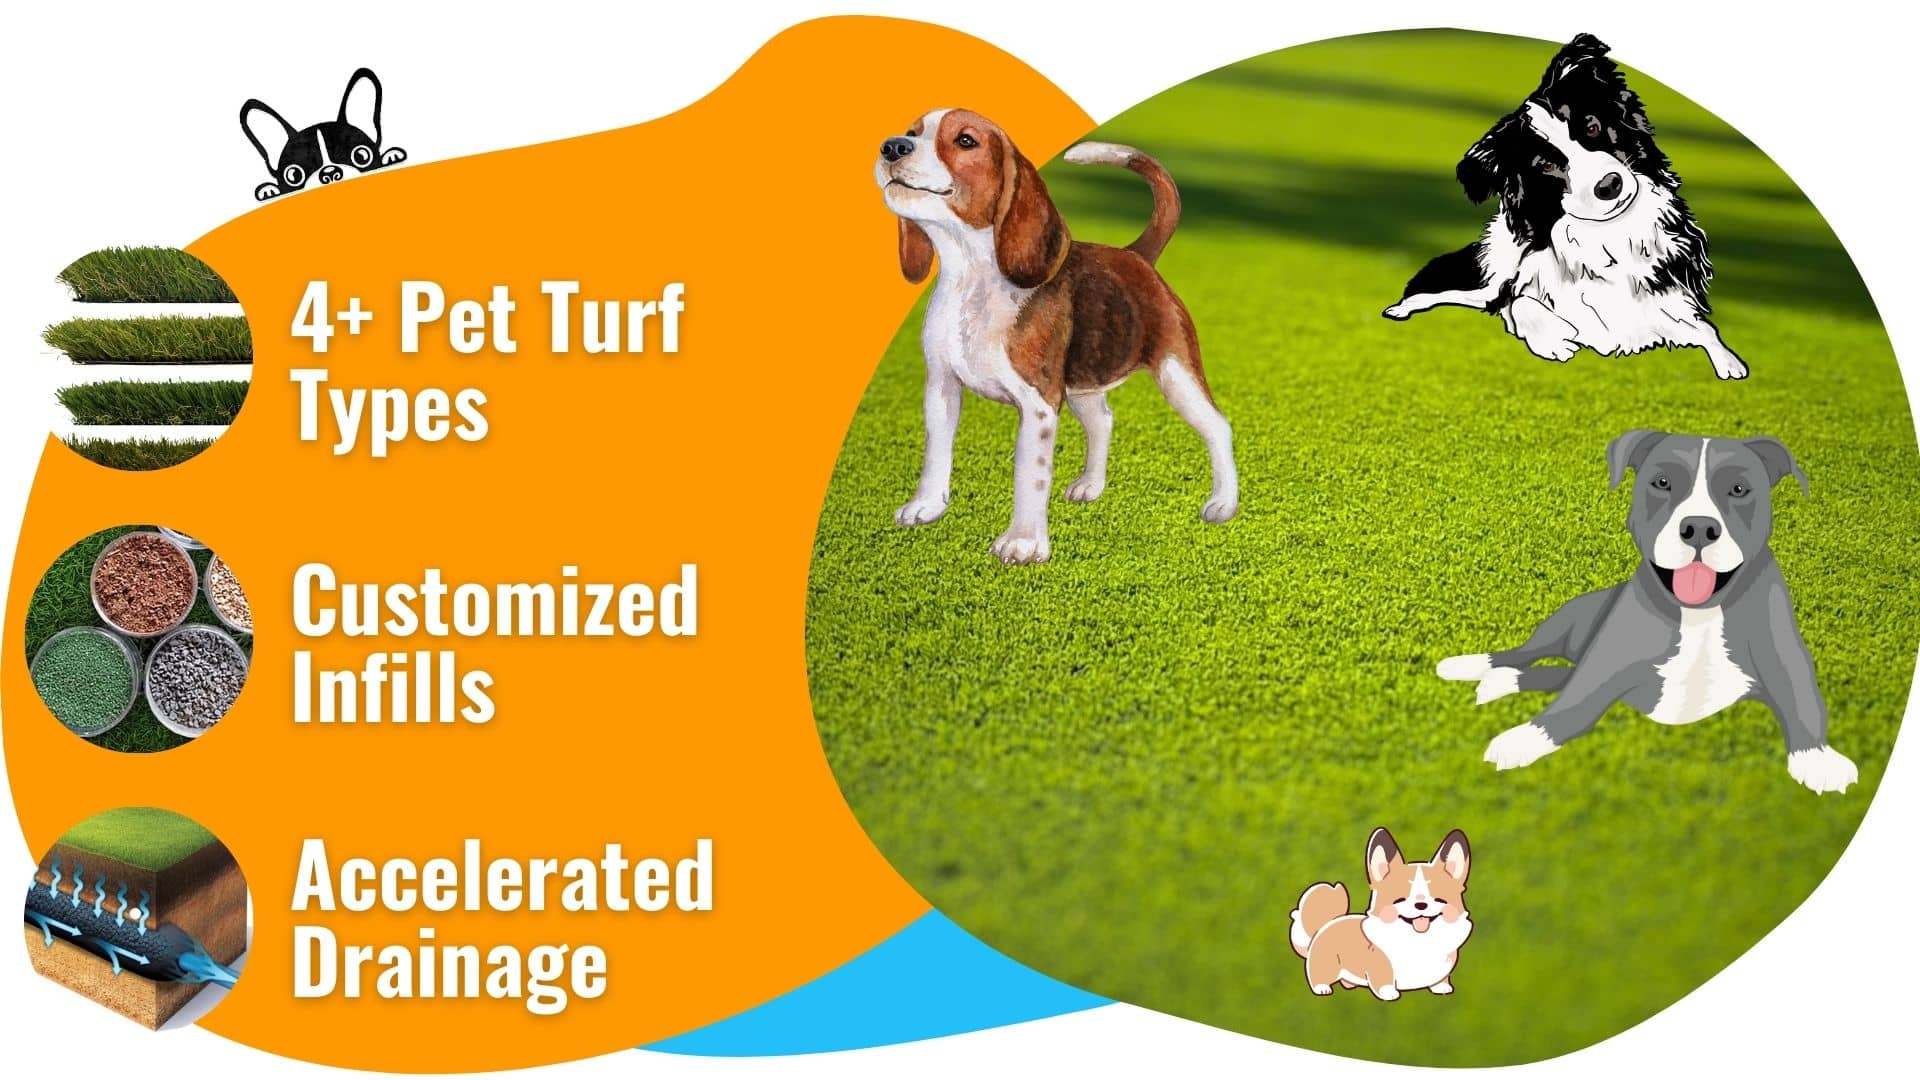 Pet Turf Types, Infills, Drainage